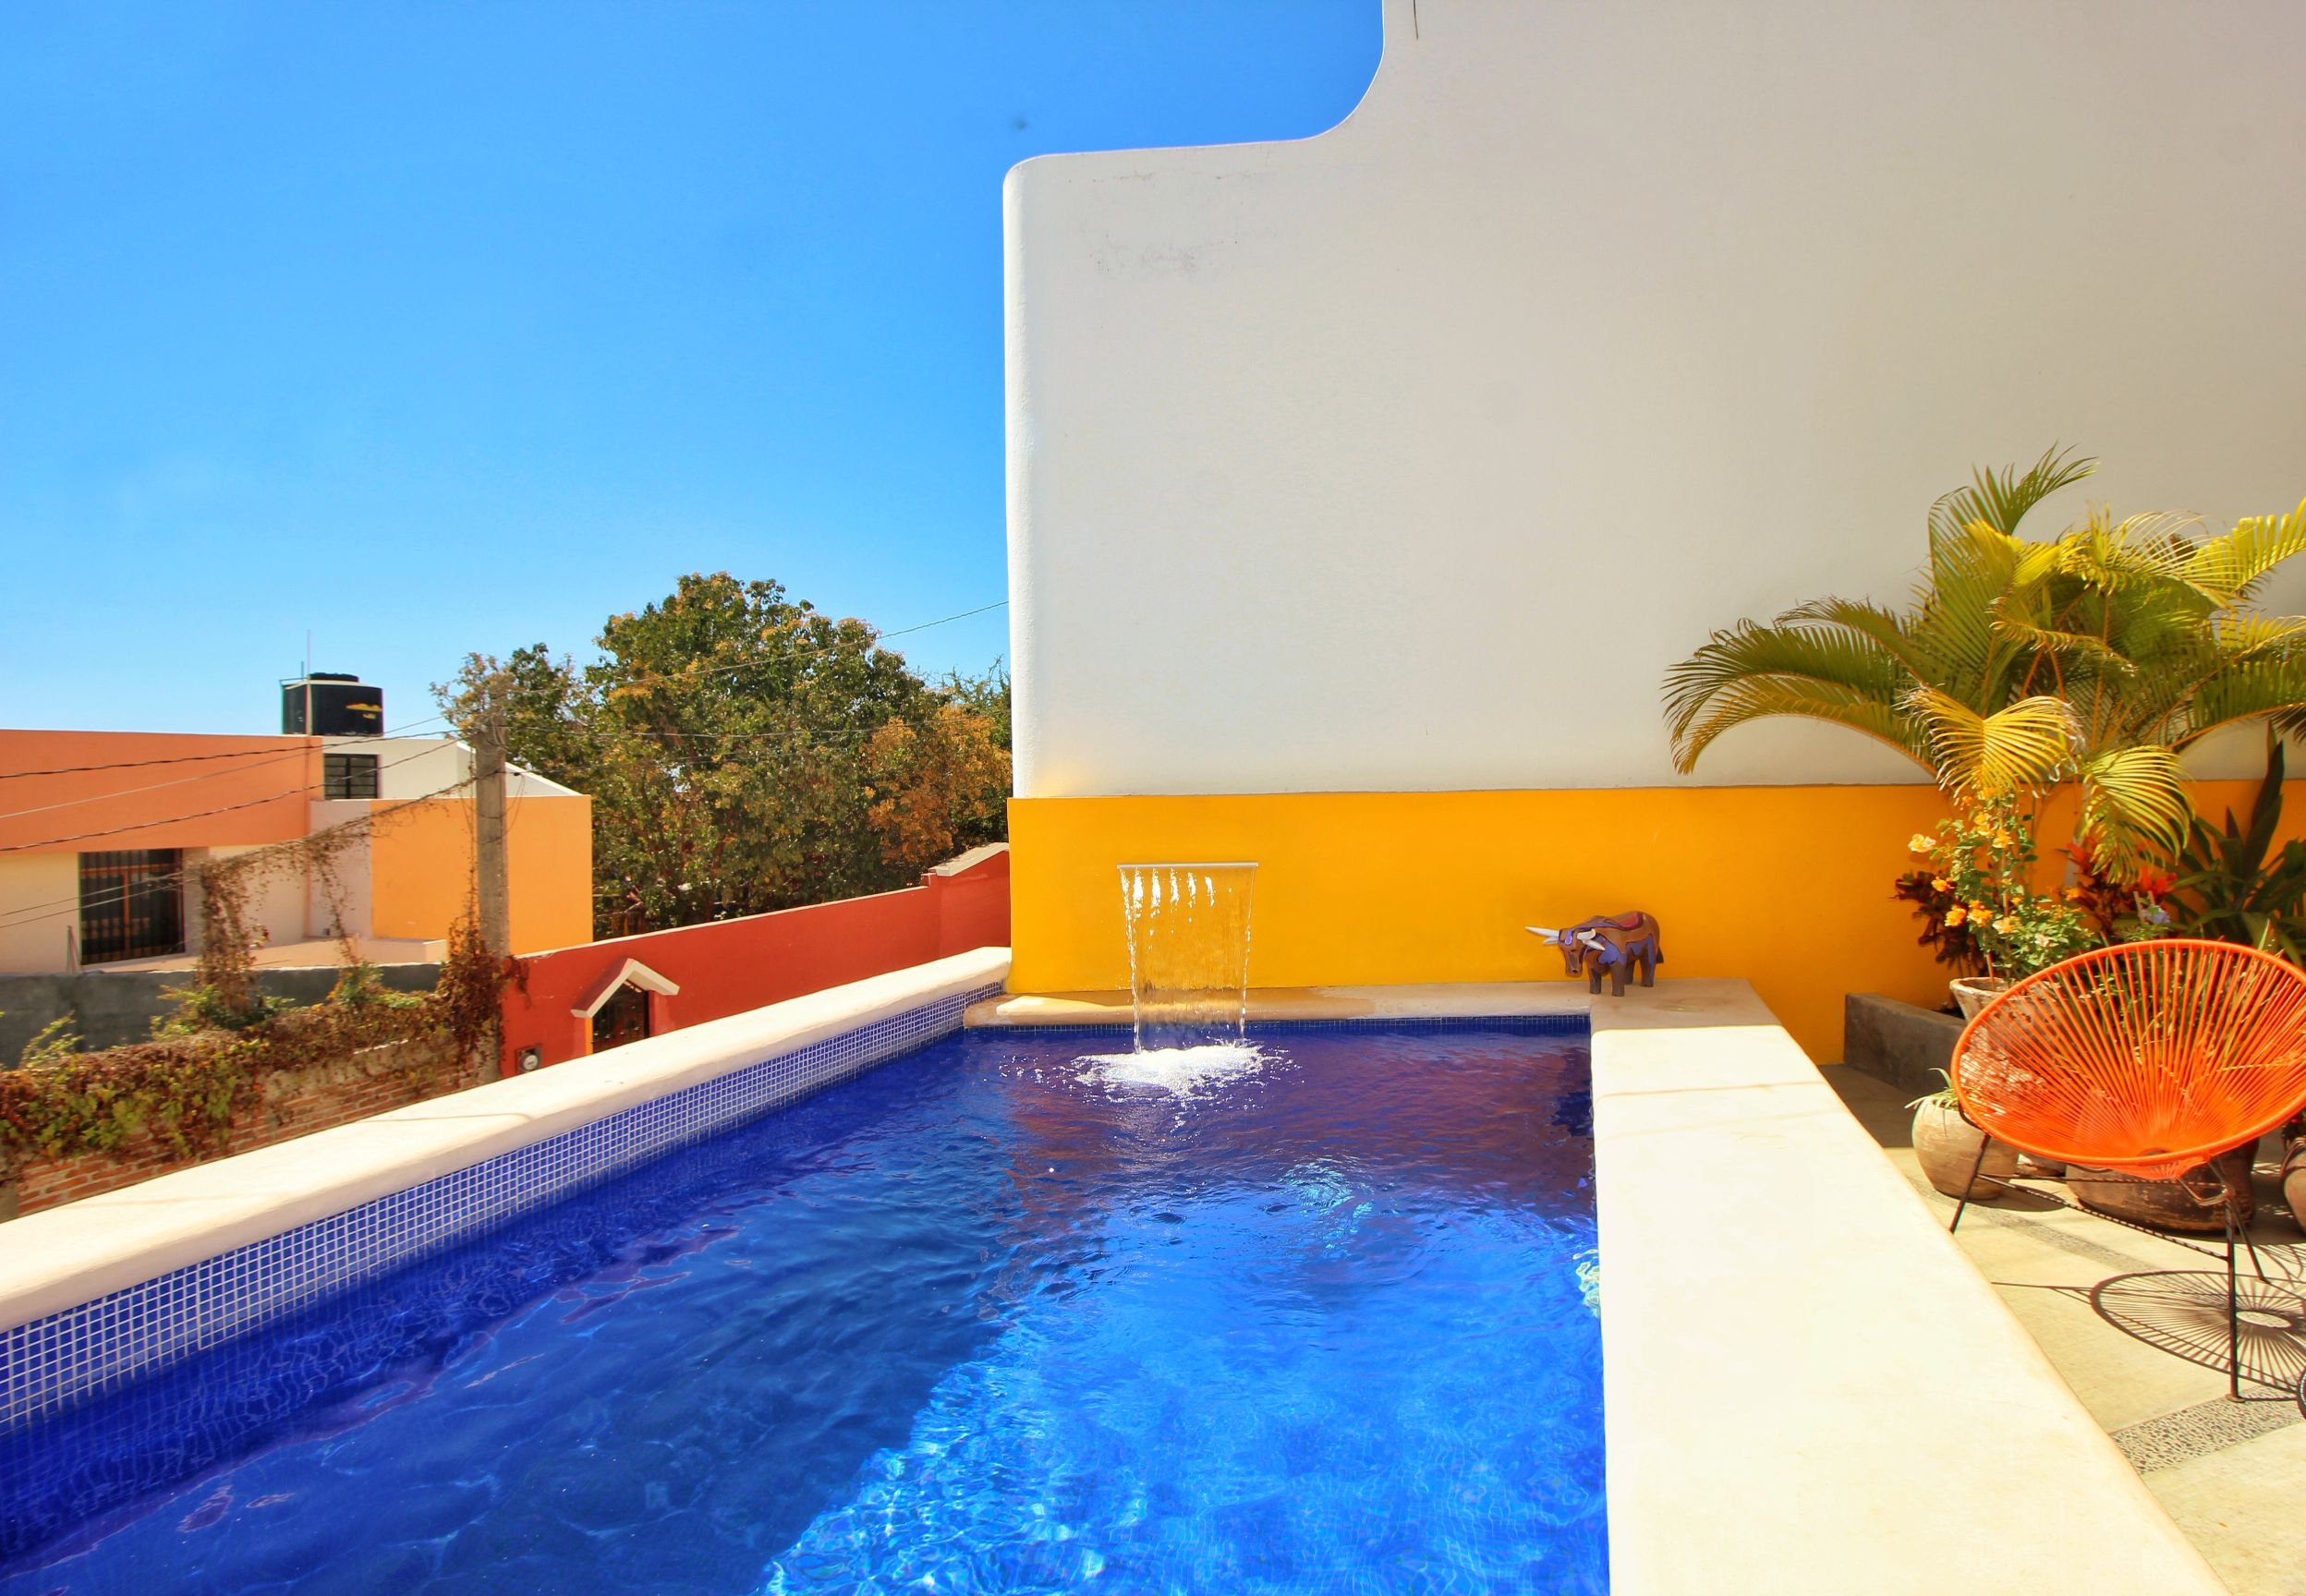 Casa Cascada pool in Mazatlan